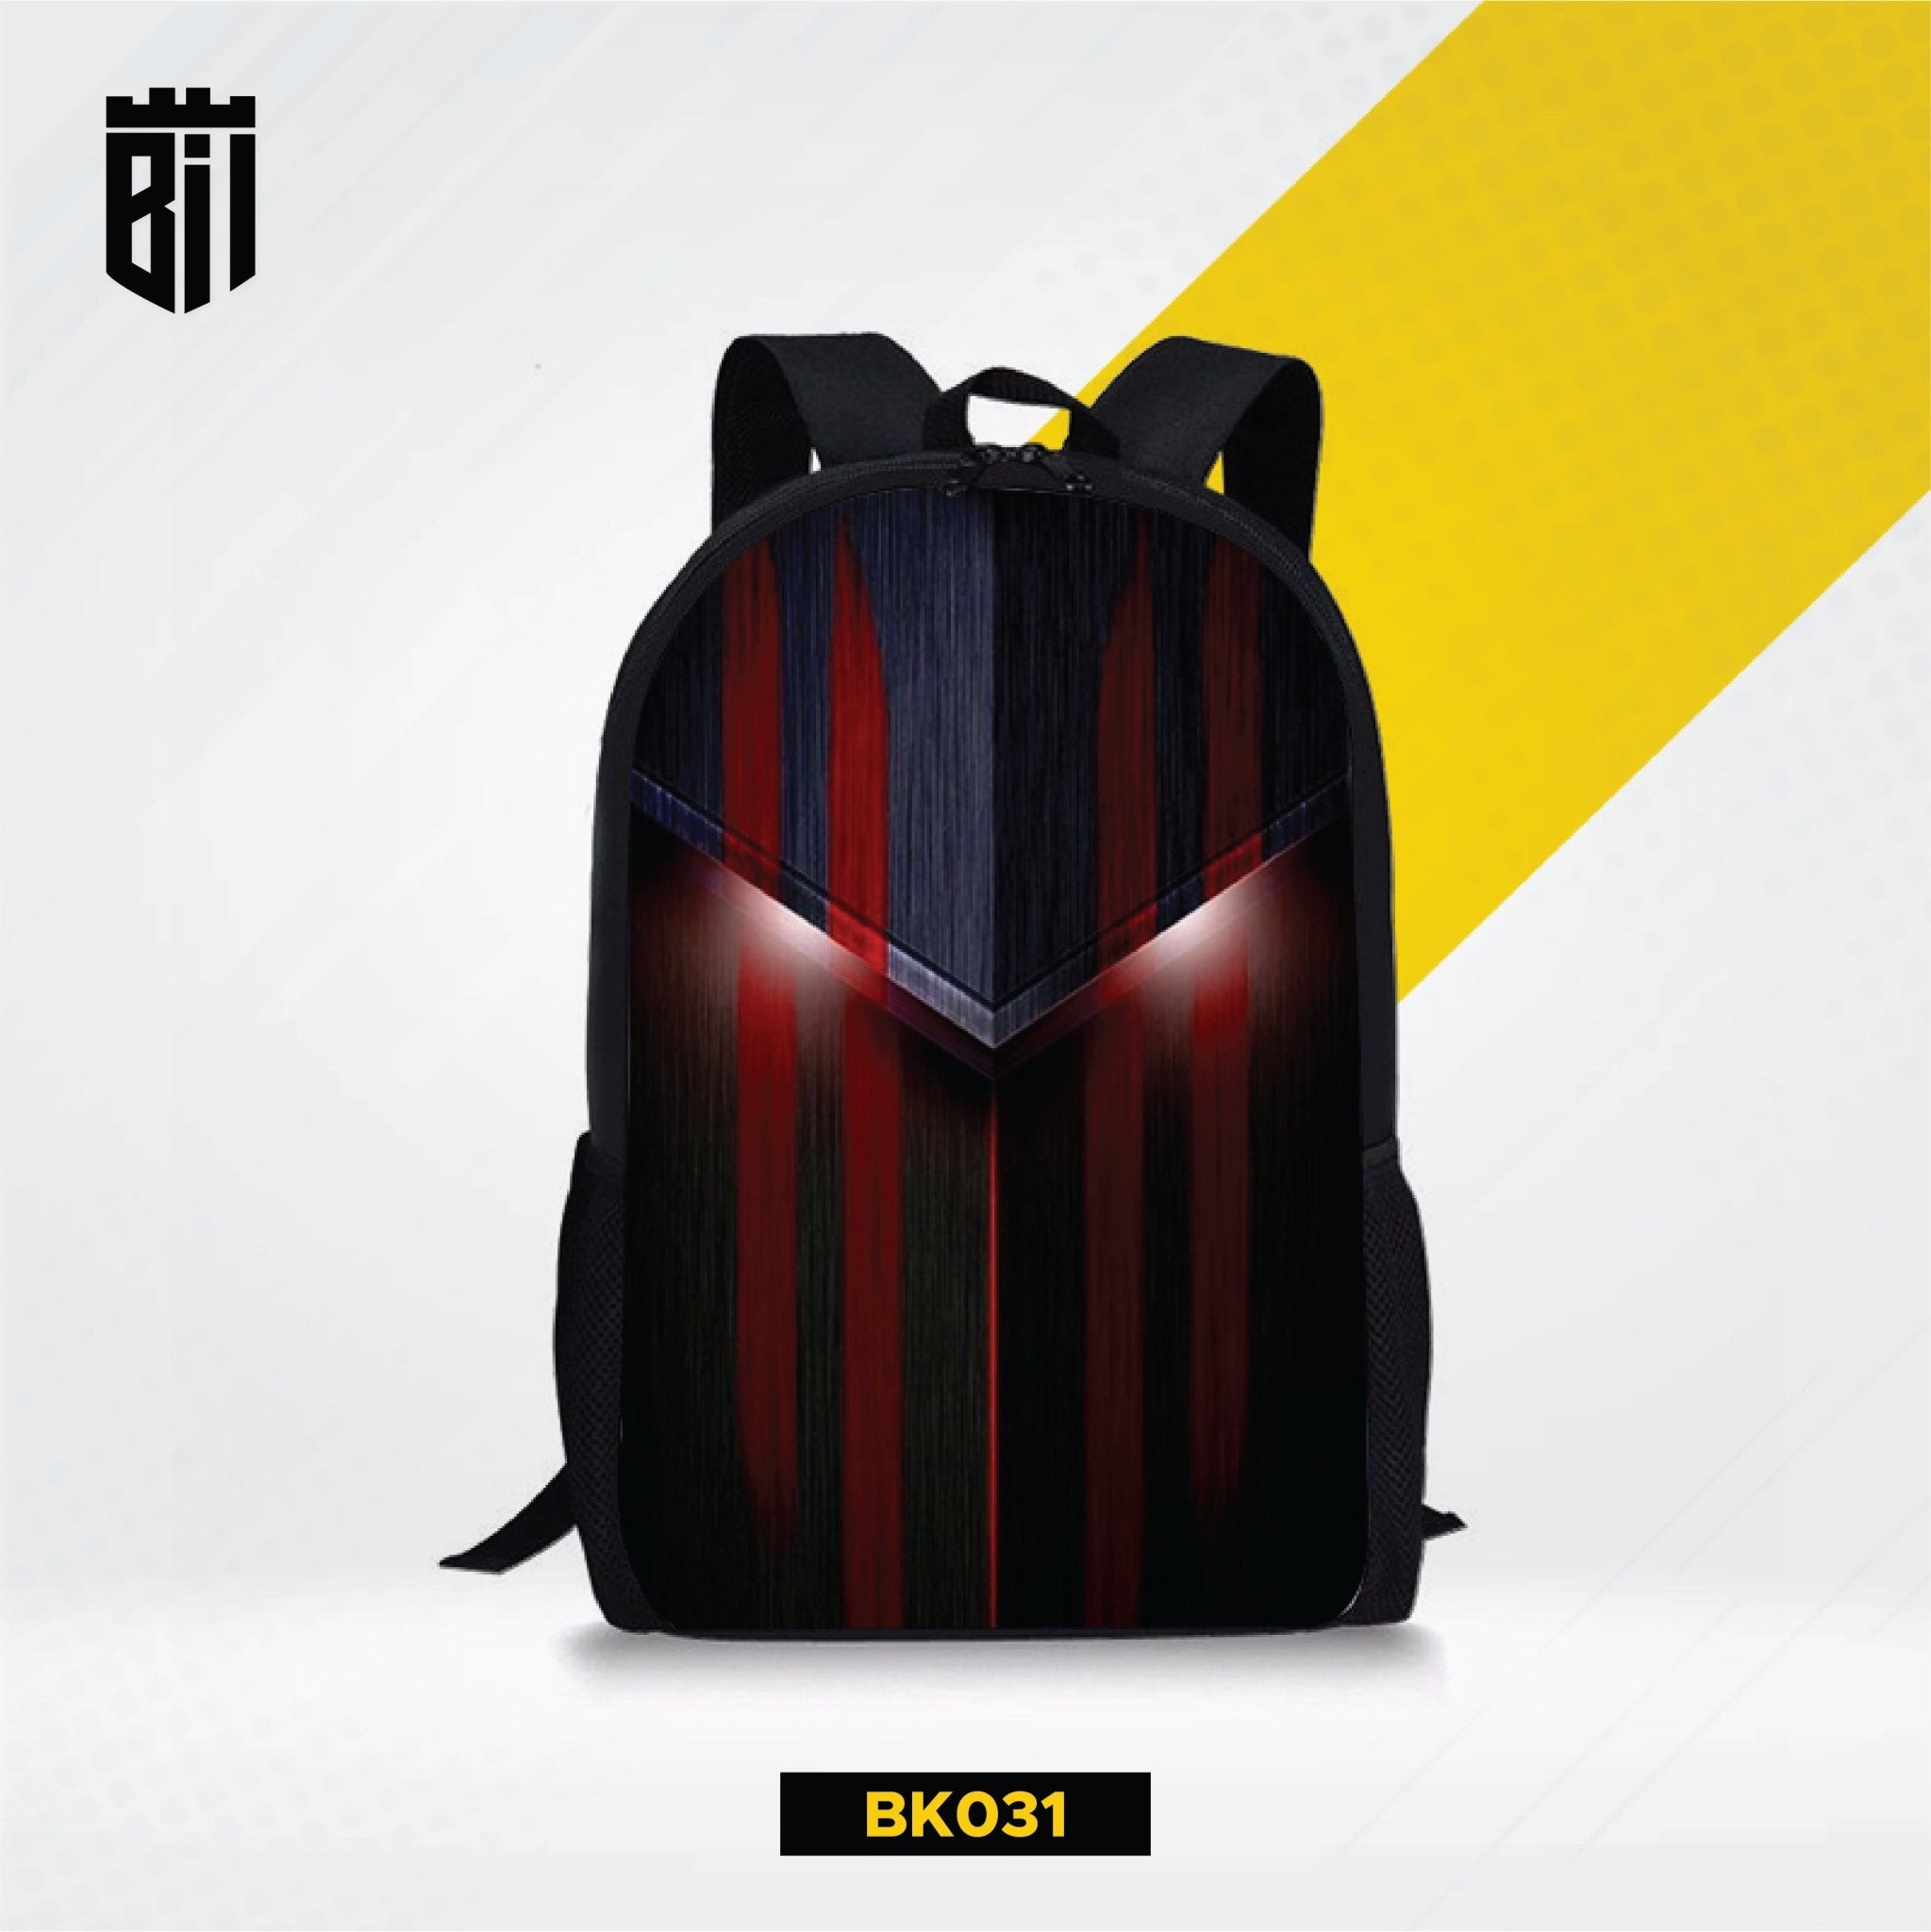 Marvel (マーブル) IRON MAN Backpack / School Bag with 2